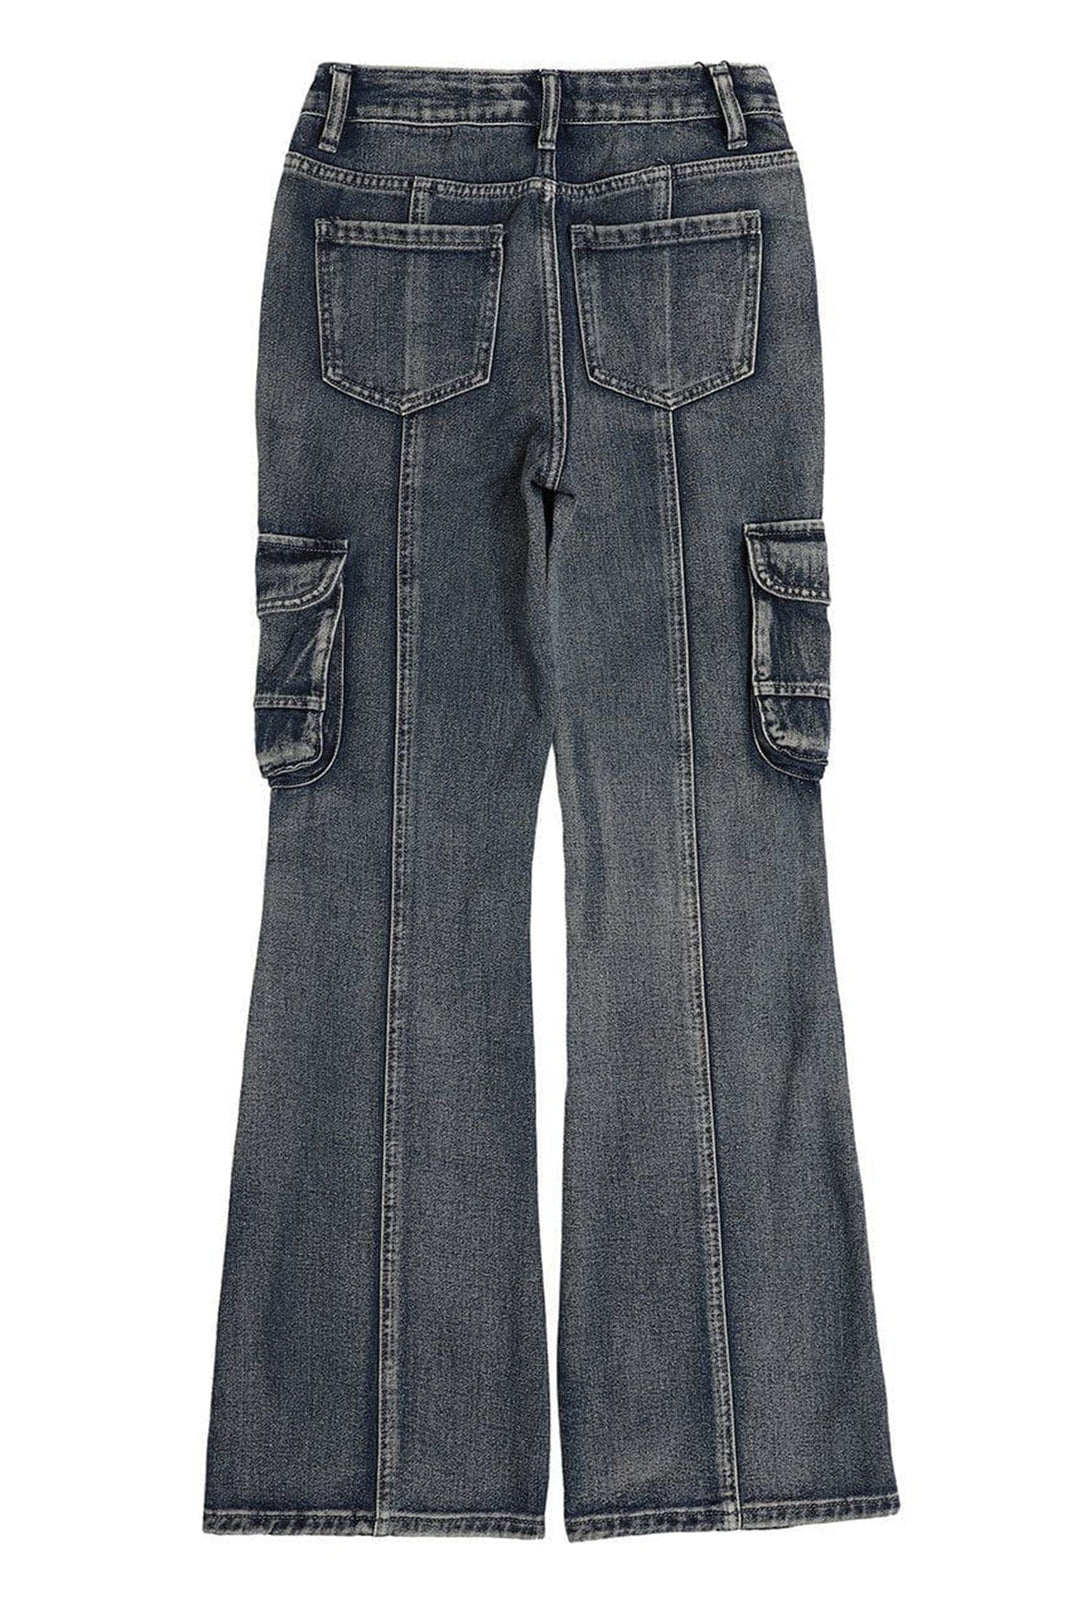 AlanBalen® - Washed Old Slim Fit Jeans AlanBalen